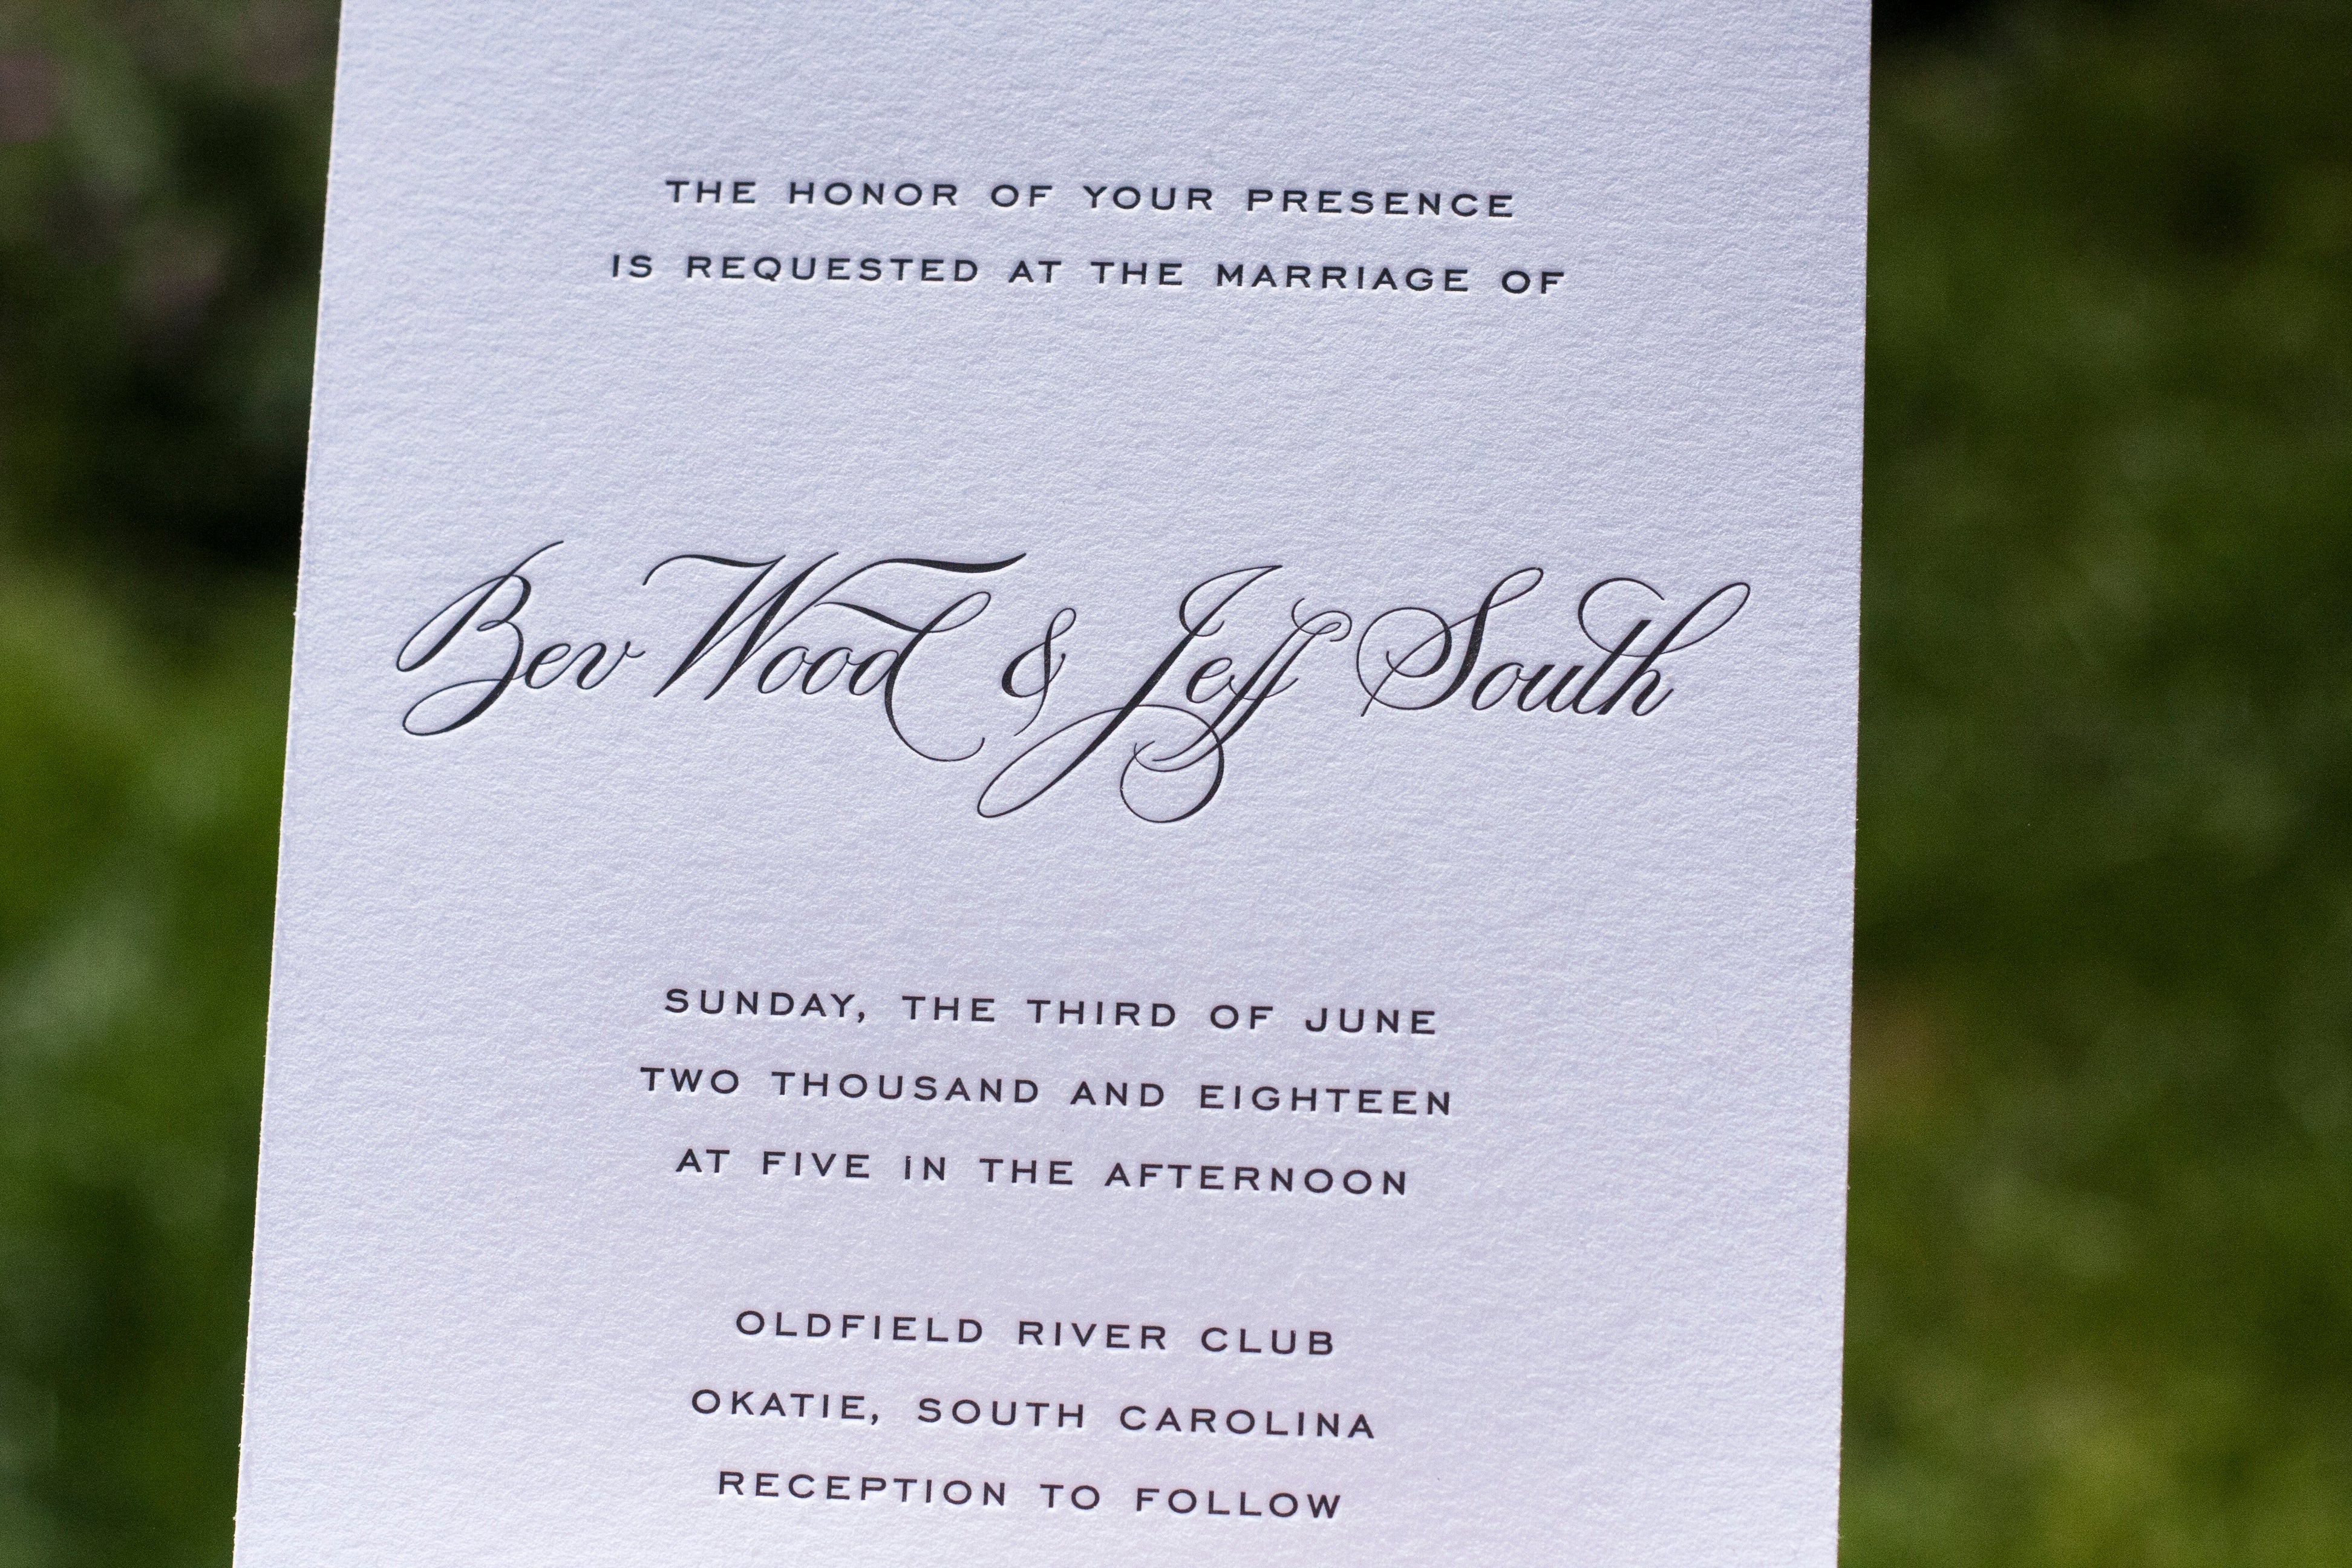 Letterpress wedding invitations southern elegance custom printing colorado boulder denver